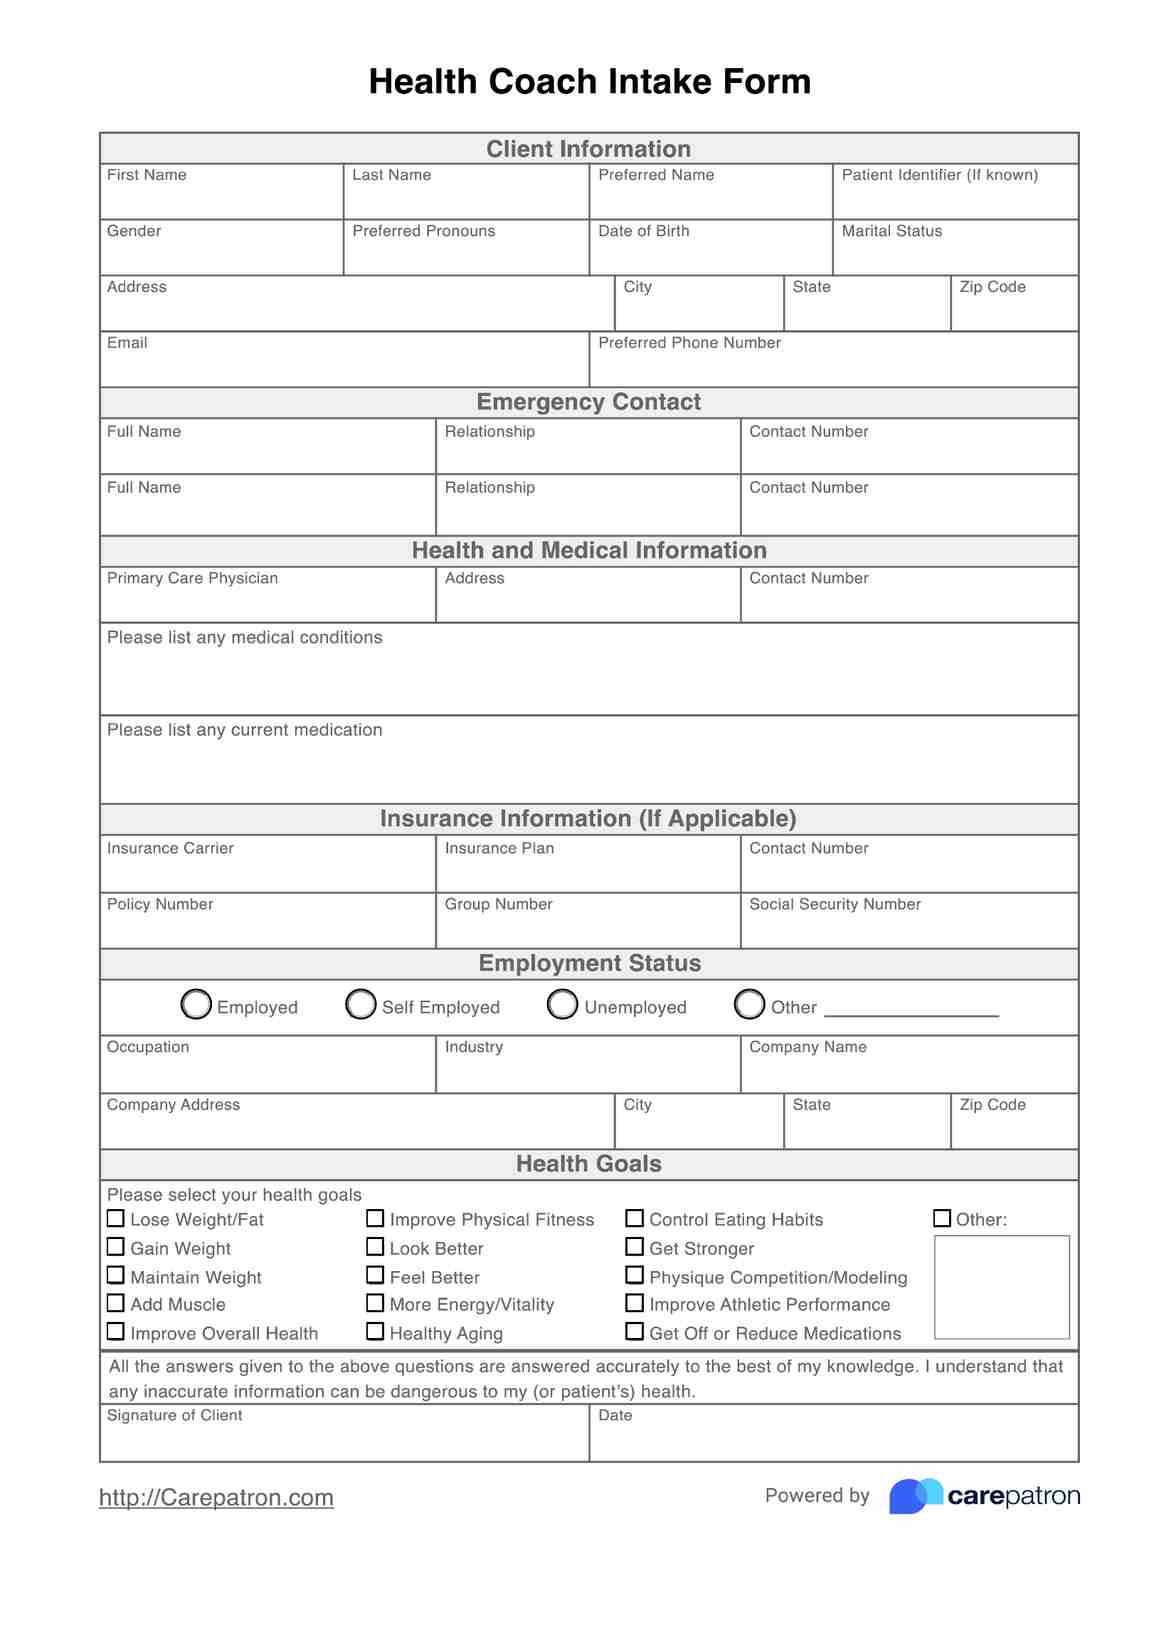 Health Coach Intake Form PDF Example